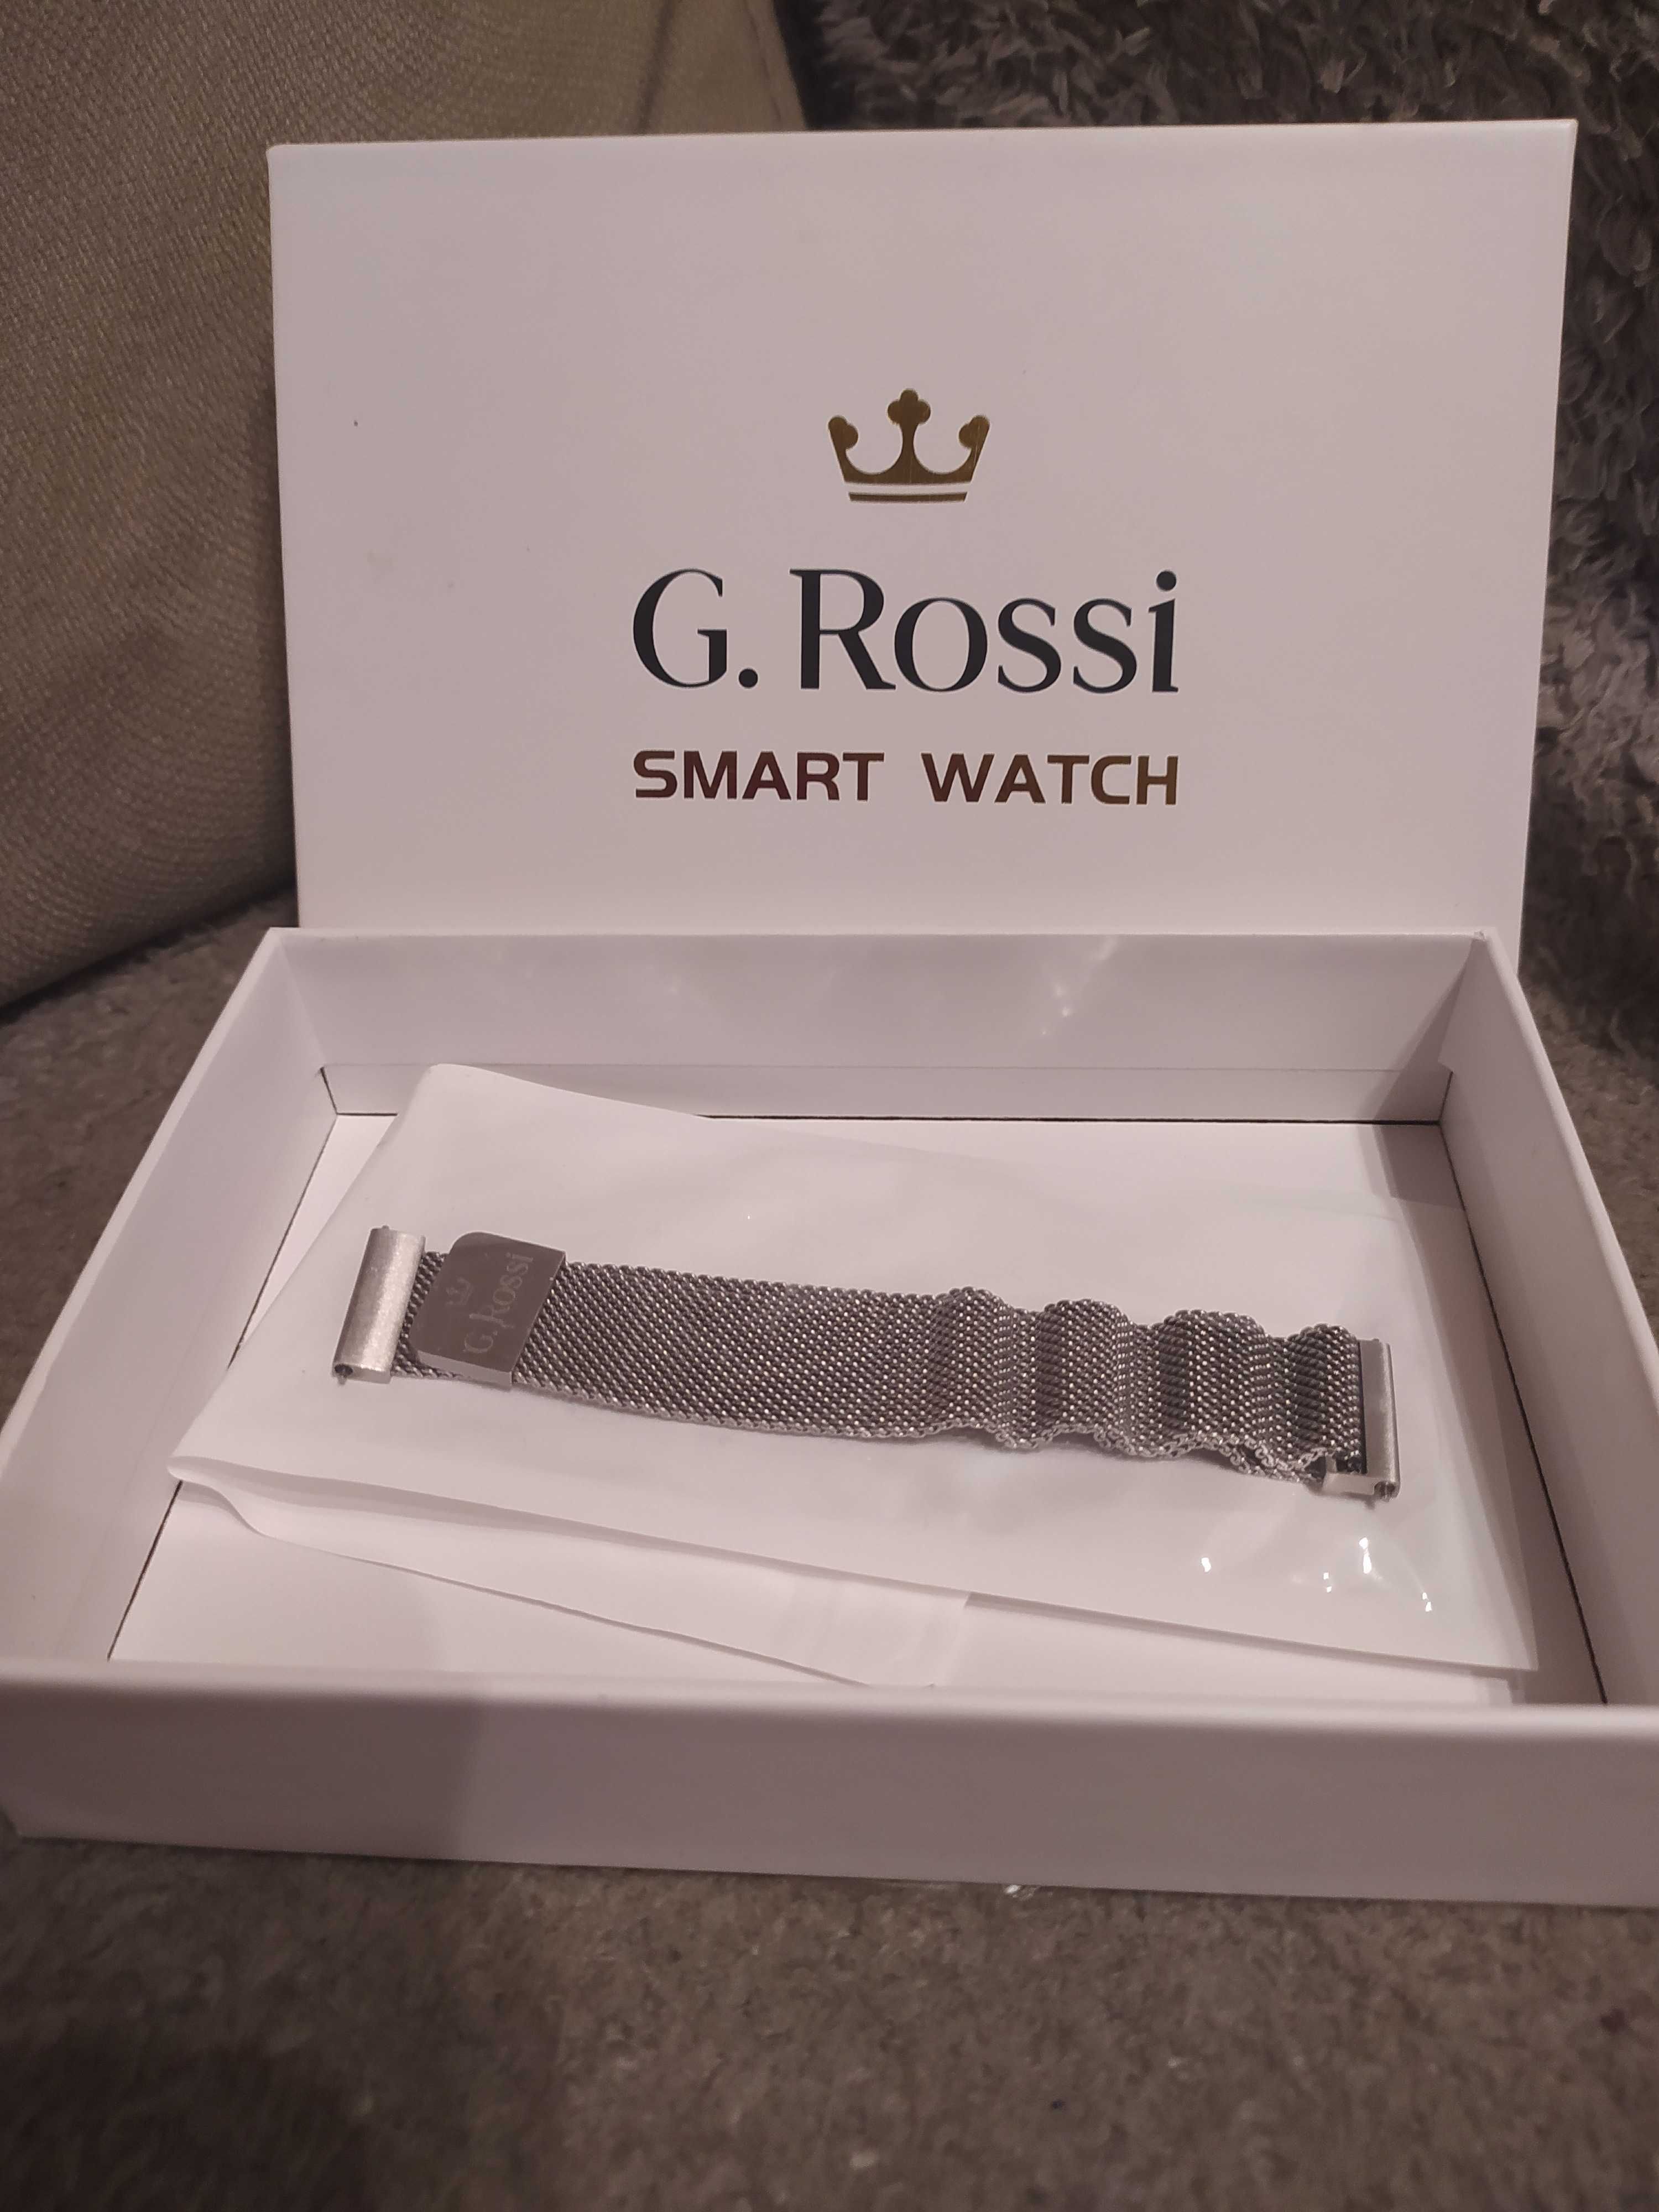 Smart watch G.Rossi